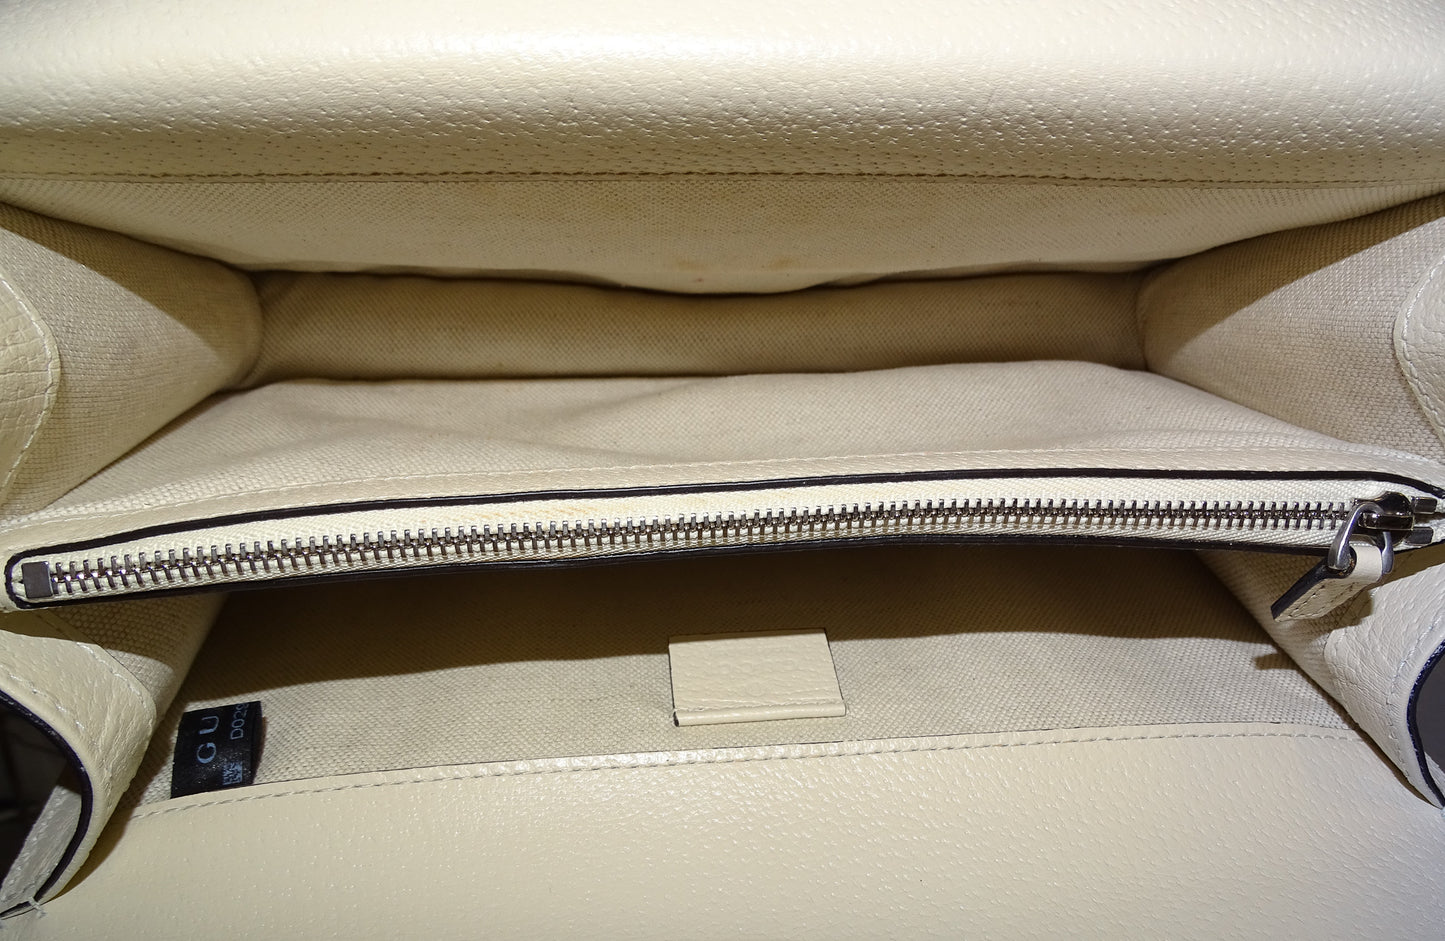 Gucci Cream Leather Small Dionysus Shoulder Bag